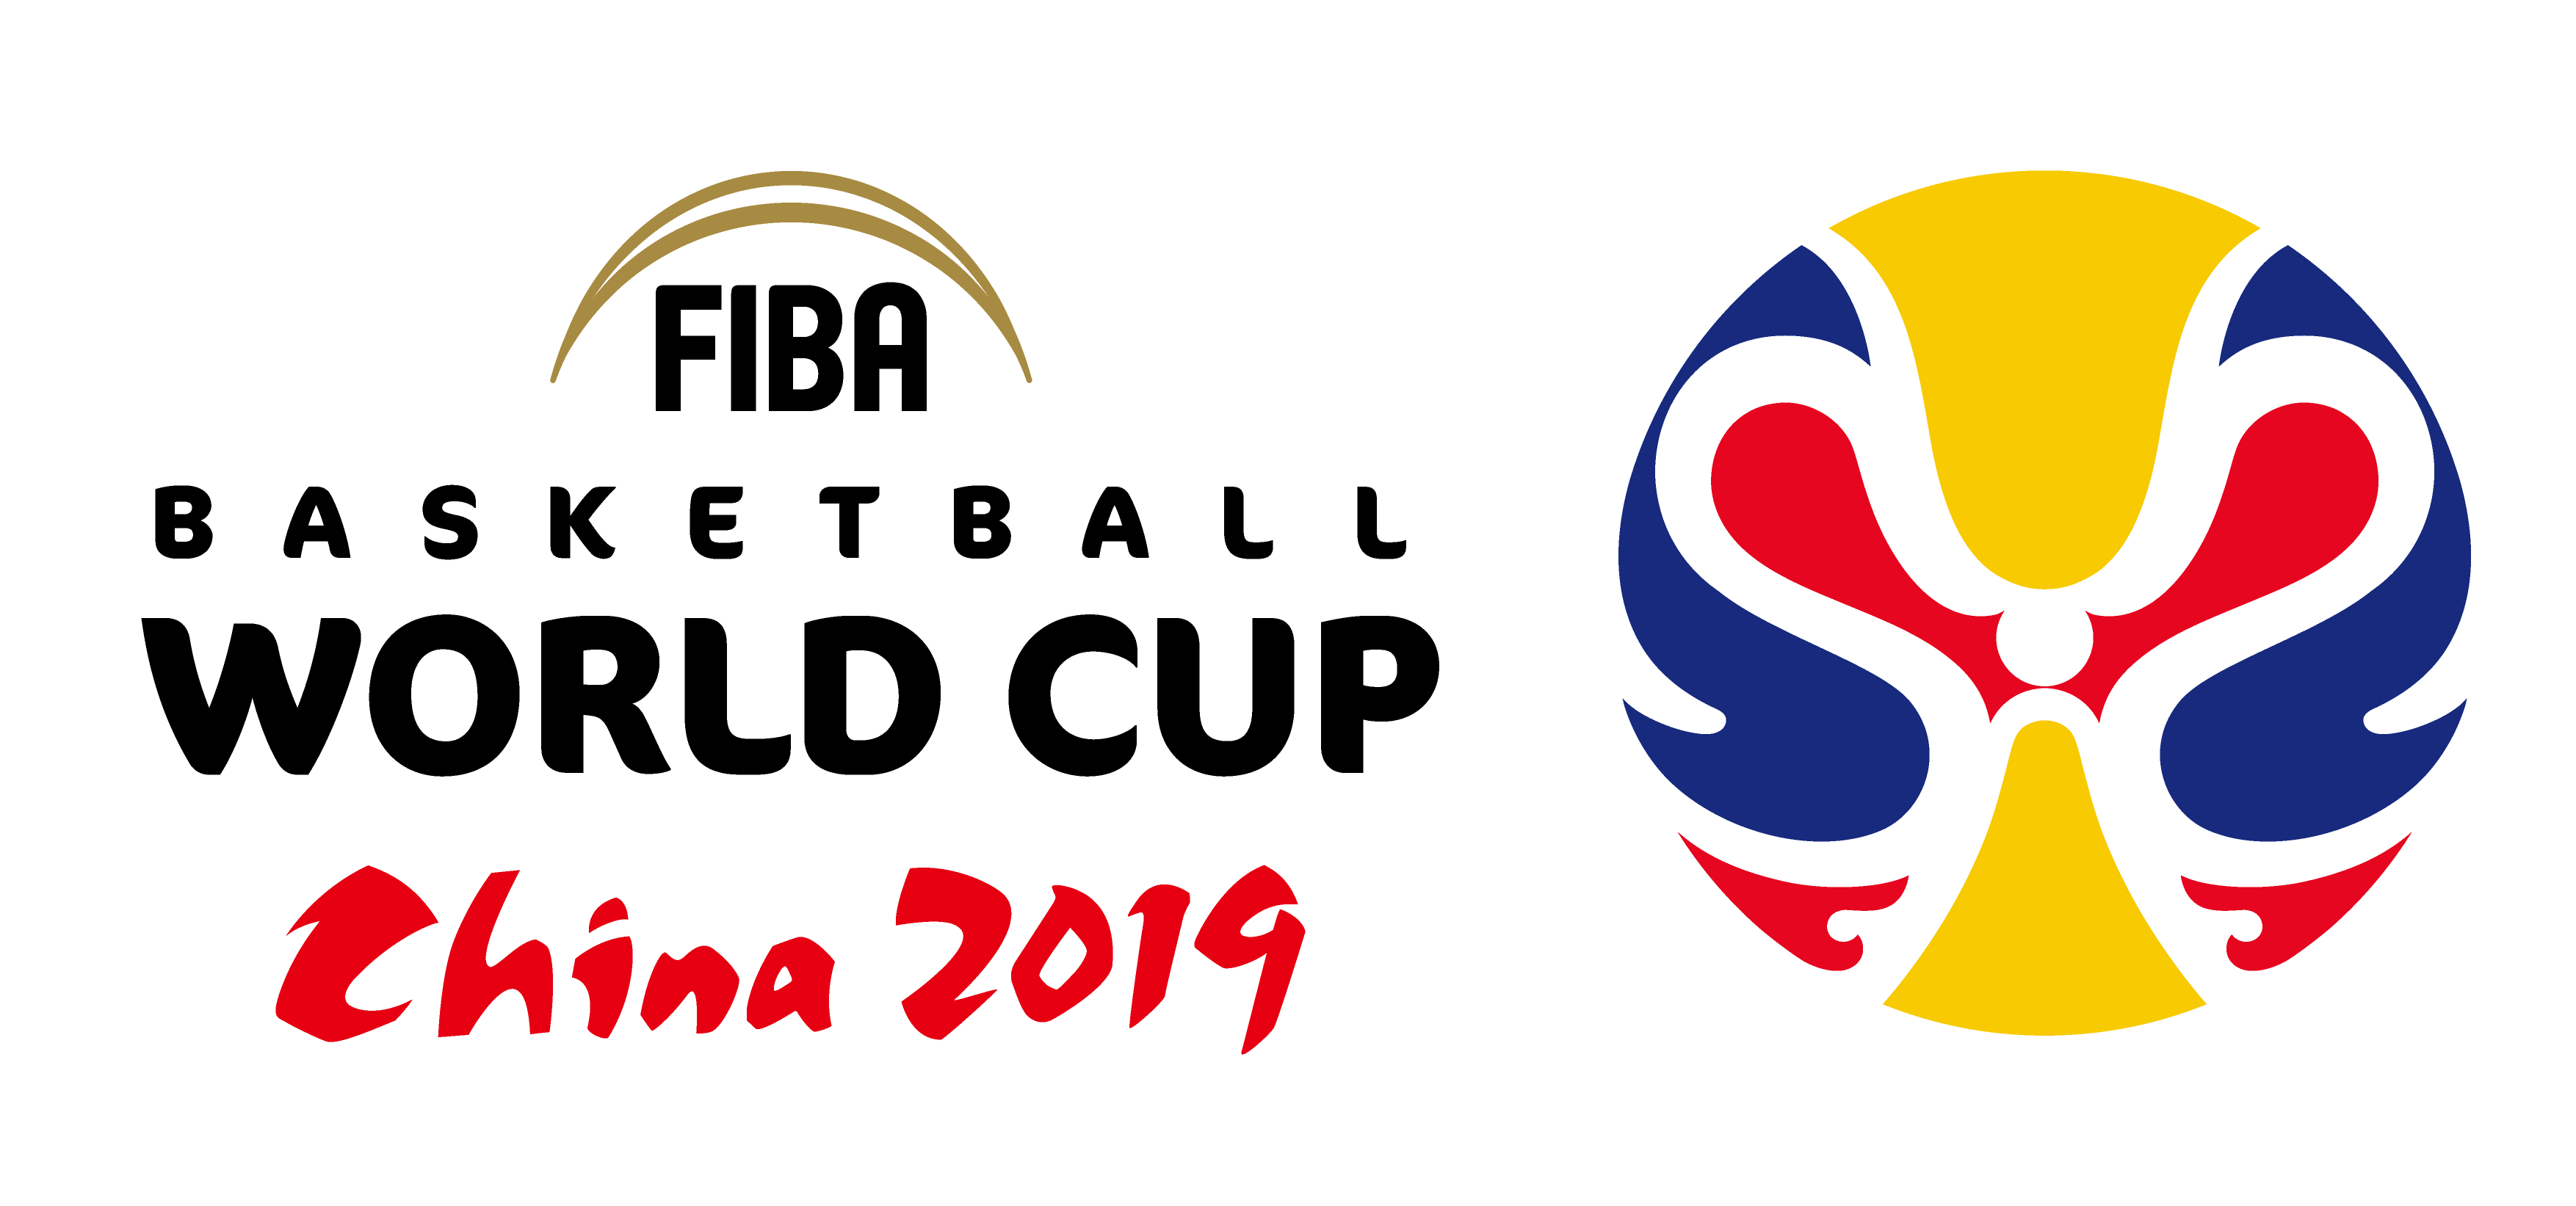 2019 Logo - FIBA Basketball World Cup 2019 Logo Designed By ACEM Student Antai